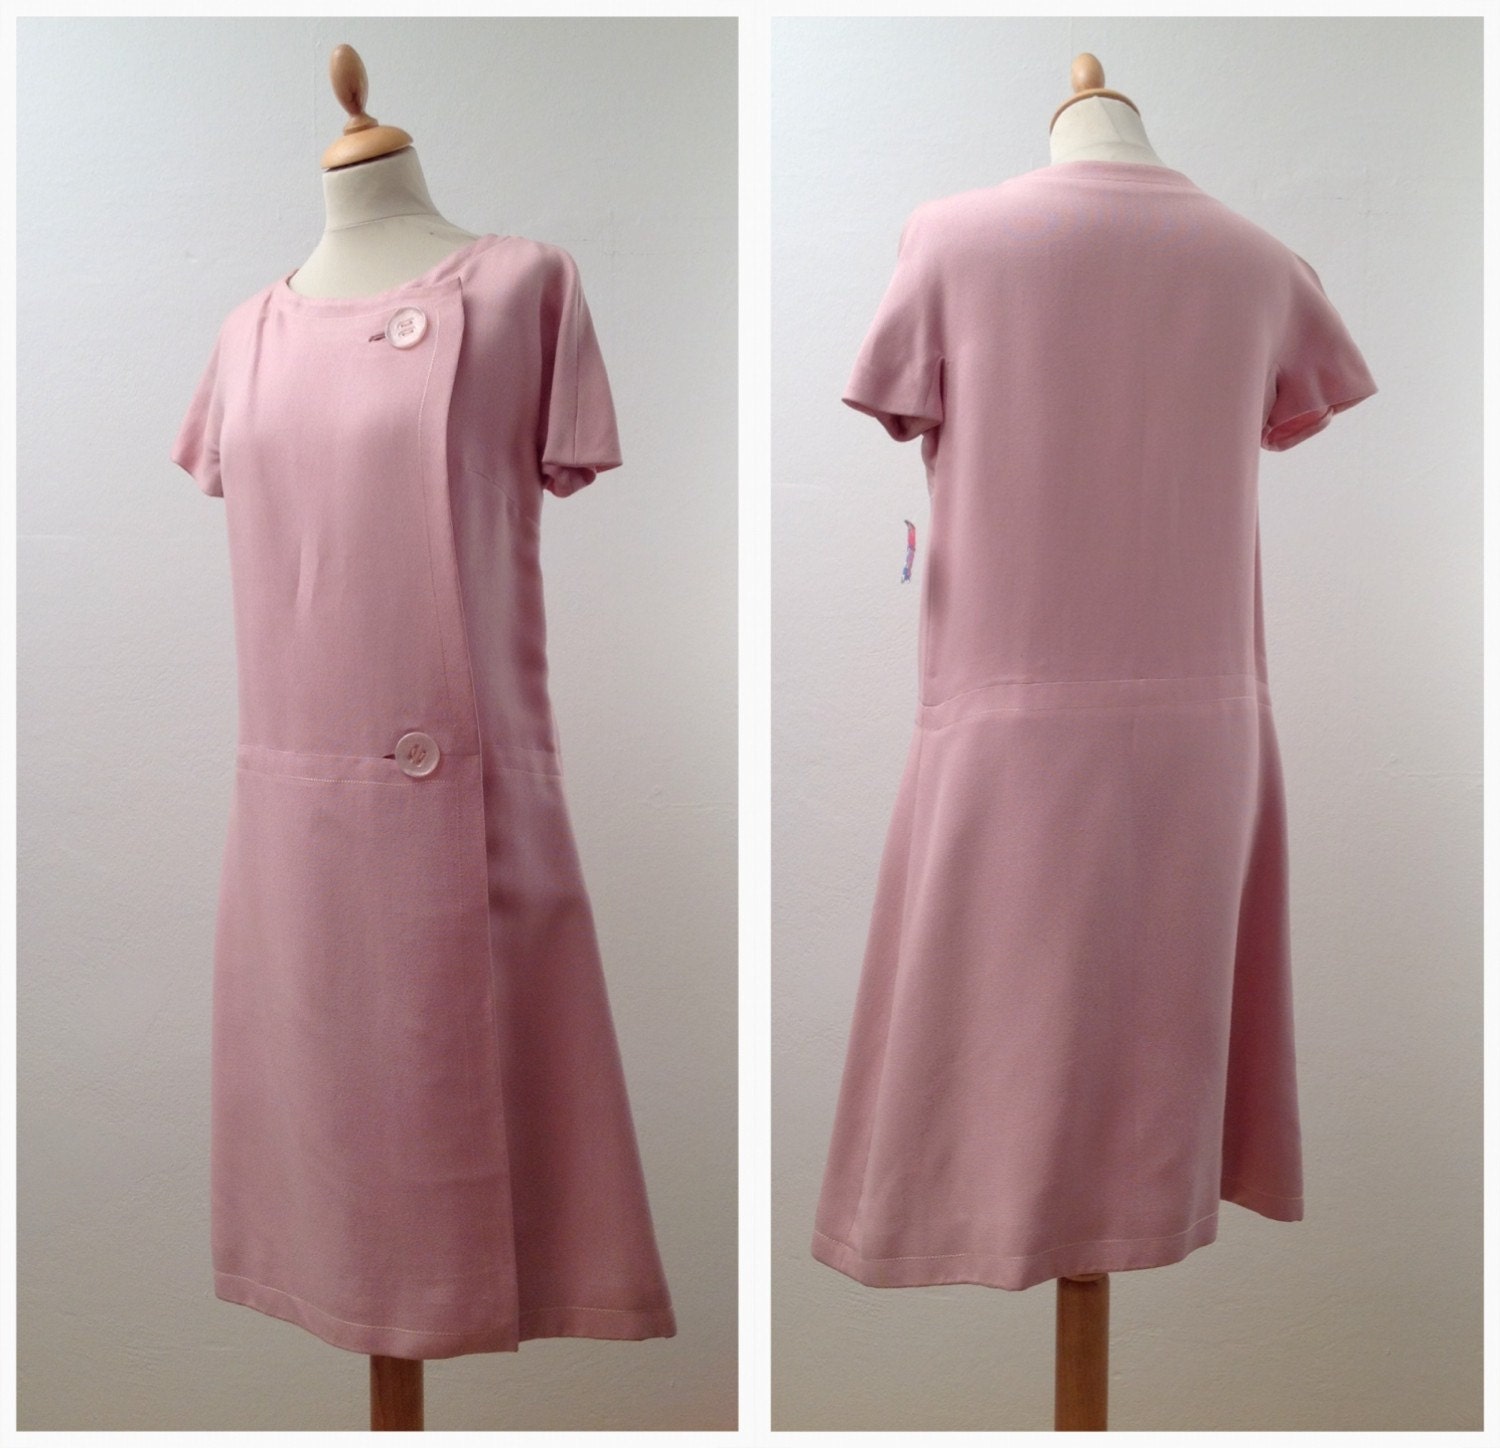 Vintage 60s mod pink cocktail dress size XL